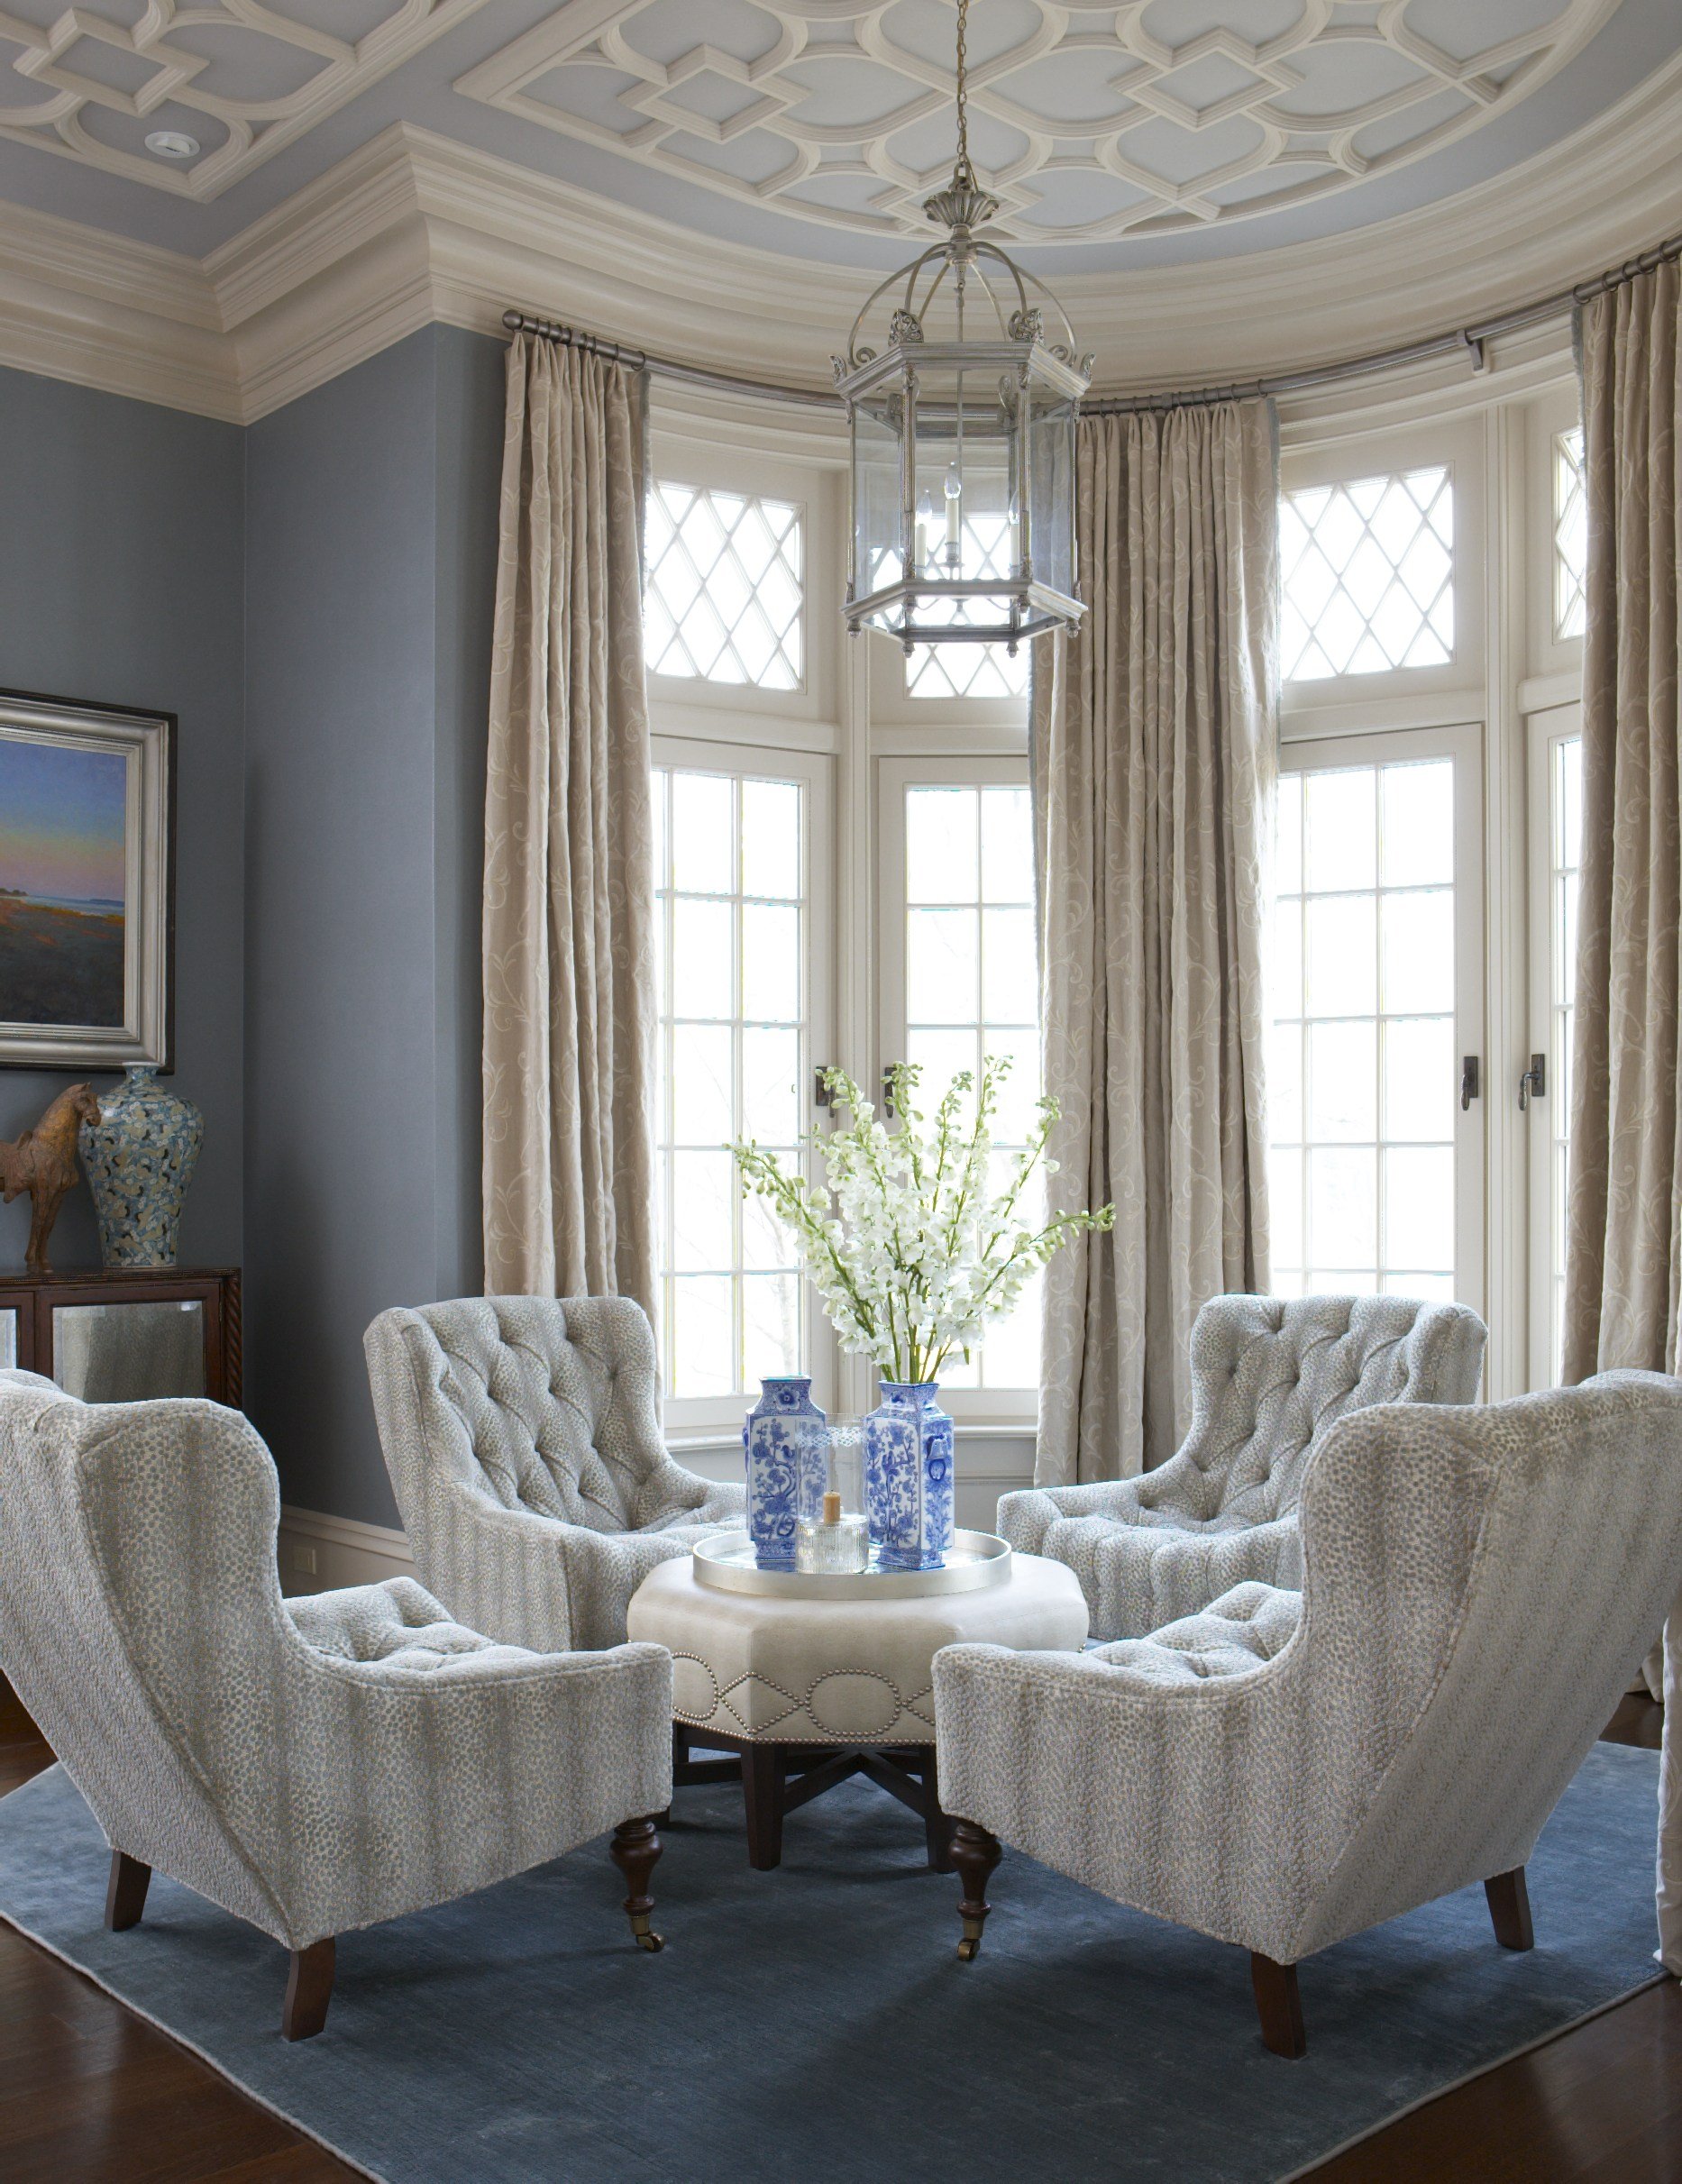 6-dreamy-seating-area-white-textured-chairs-high-windows-cream-blue-details-rinfret-interior-designs.jpg